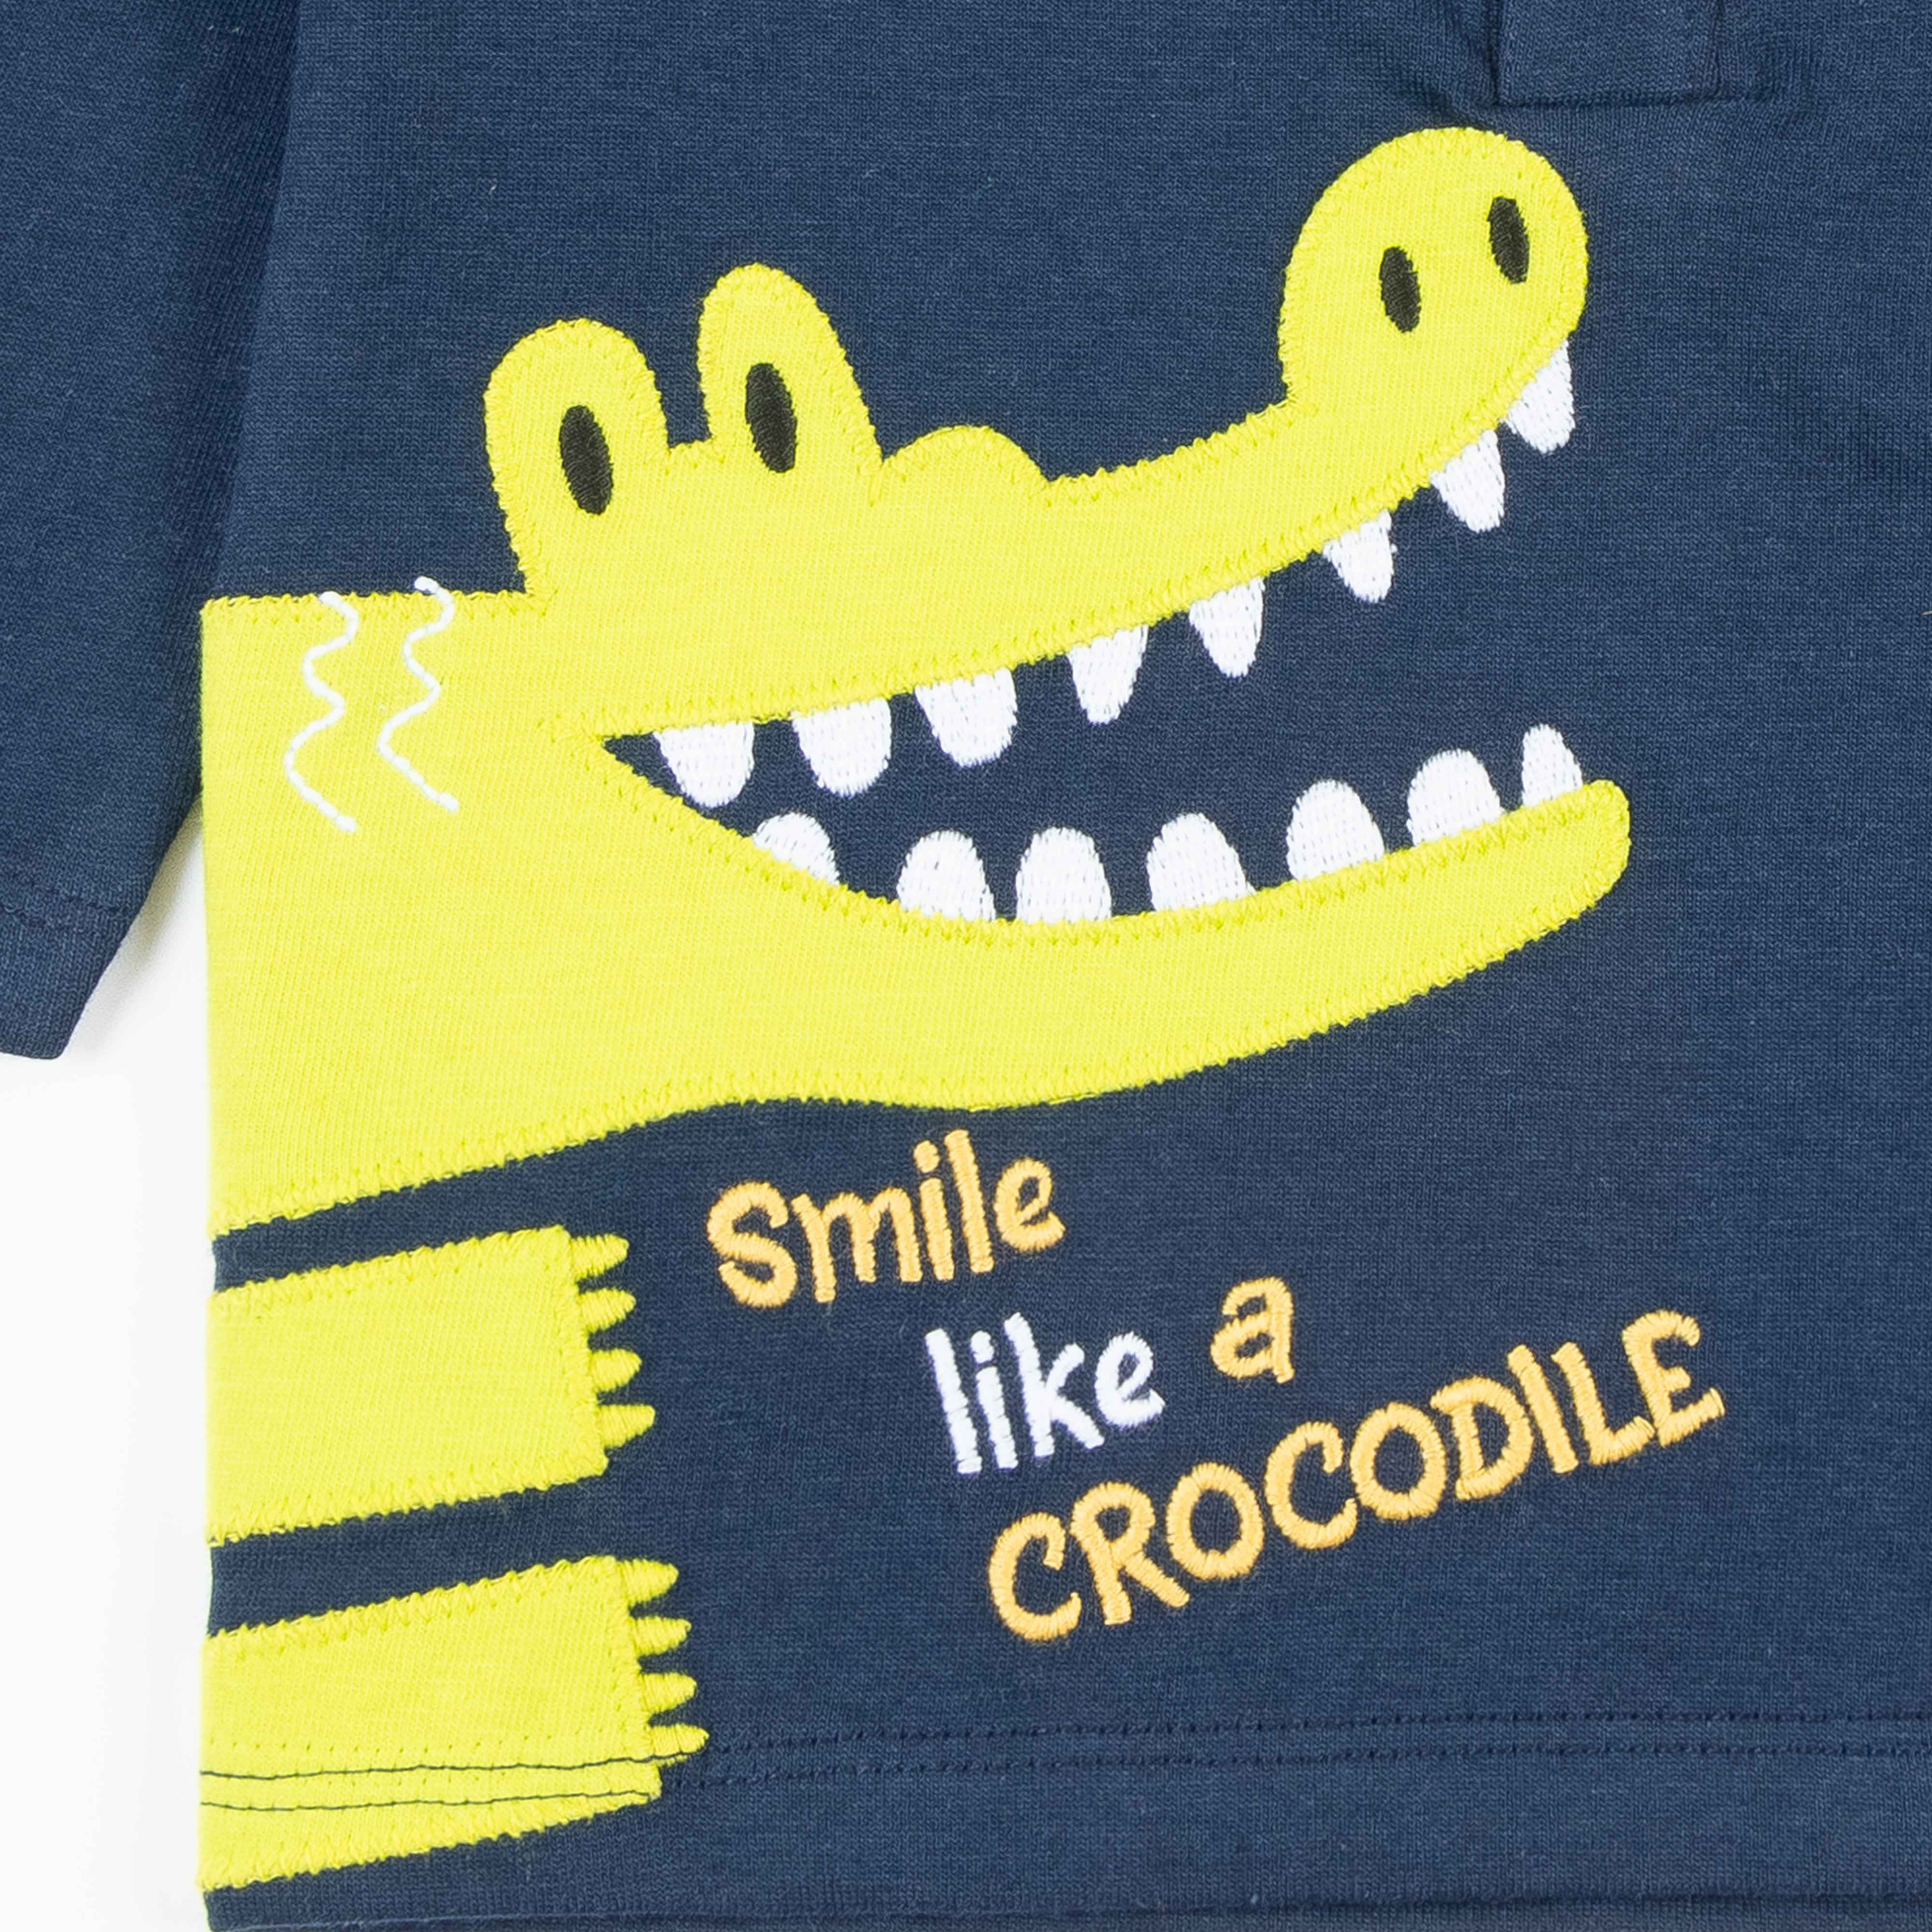 Boys Full Sleeve Crocodile Printed T-Shirt